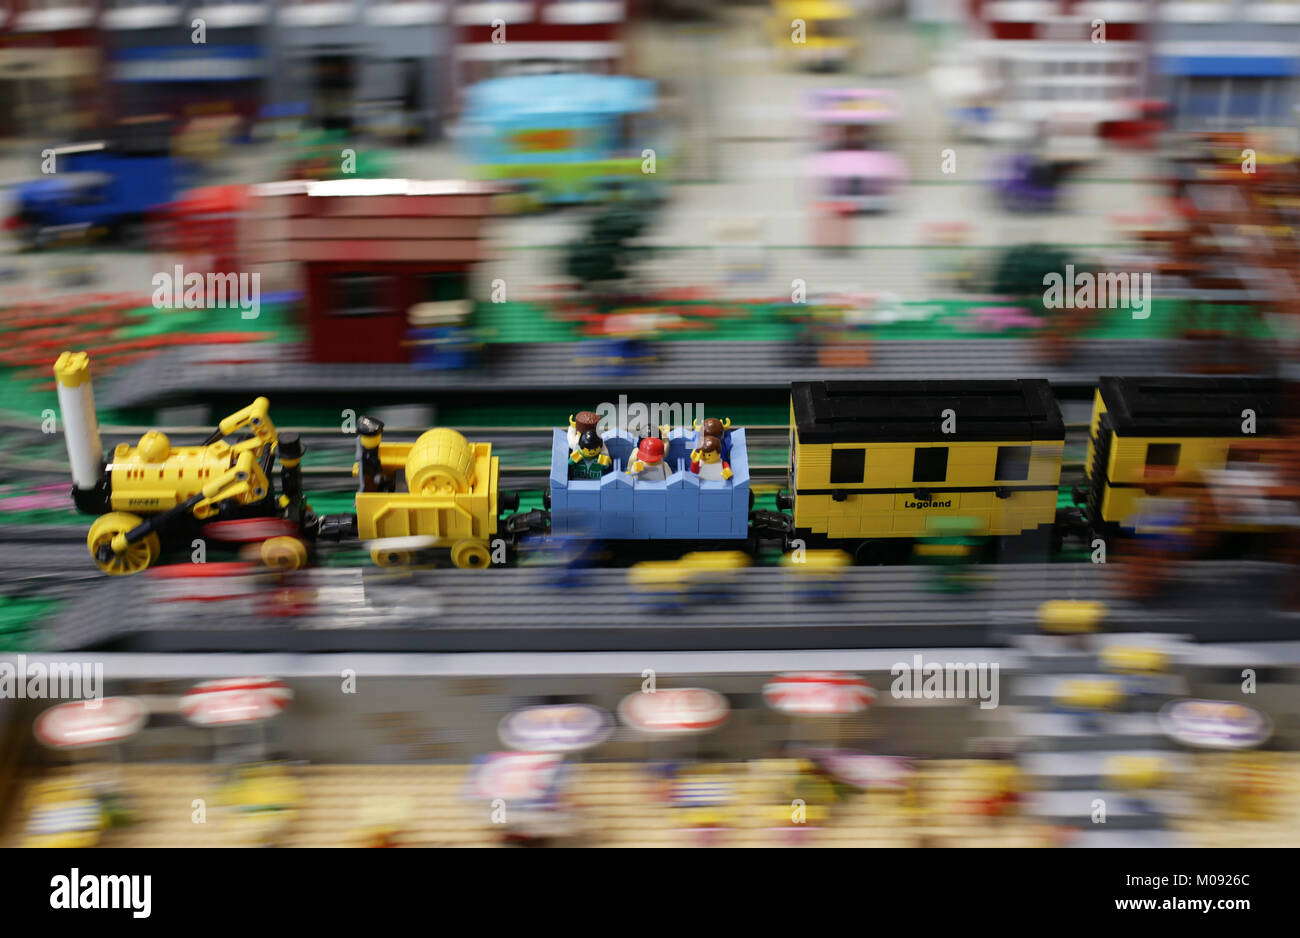 Grand train Lego City 7939 - Lego